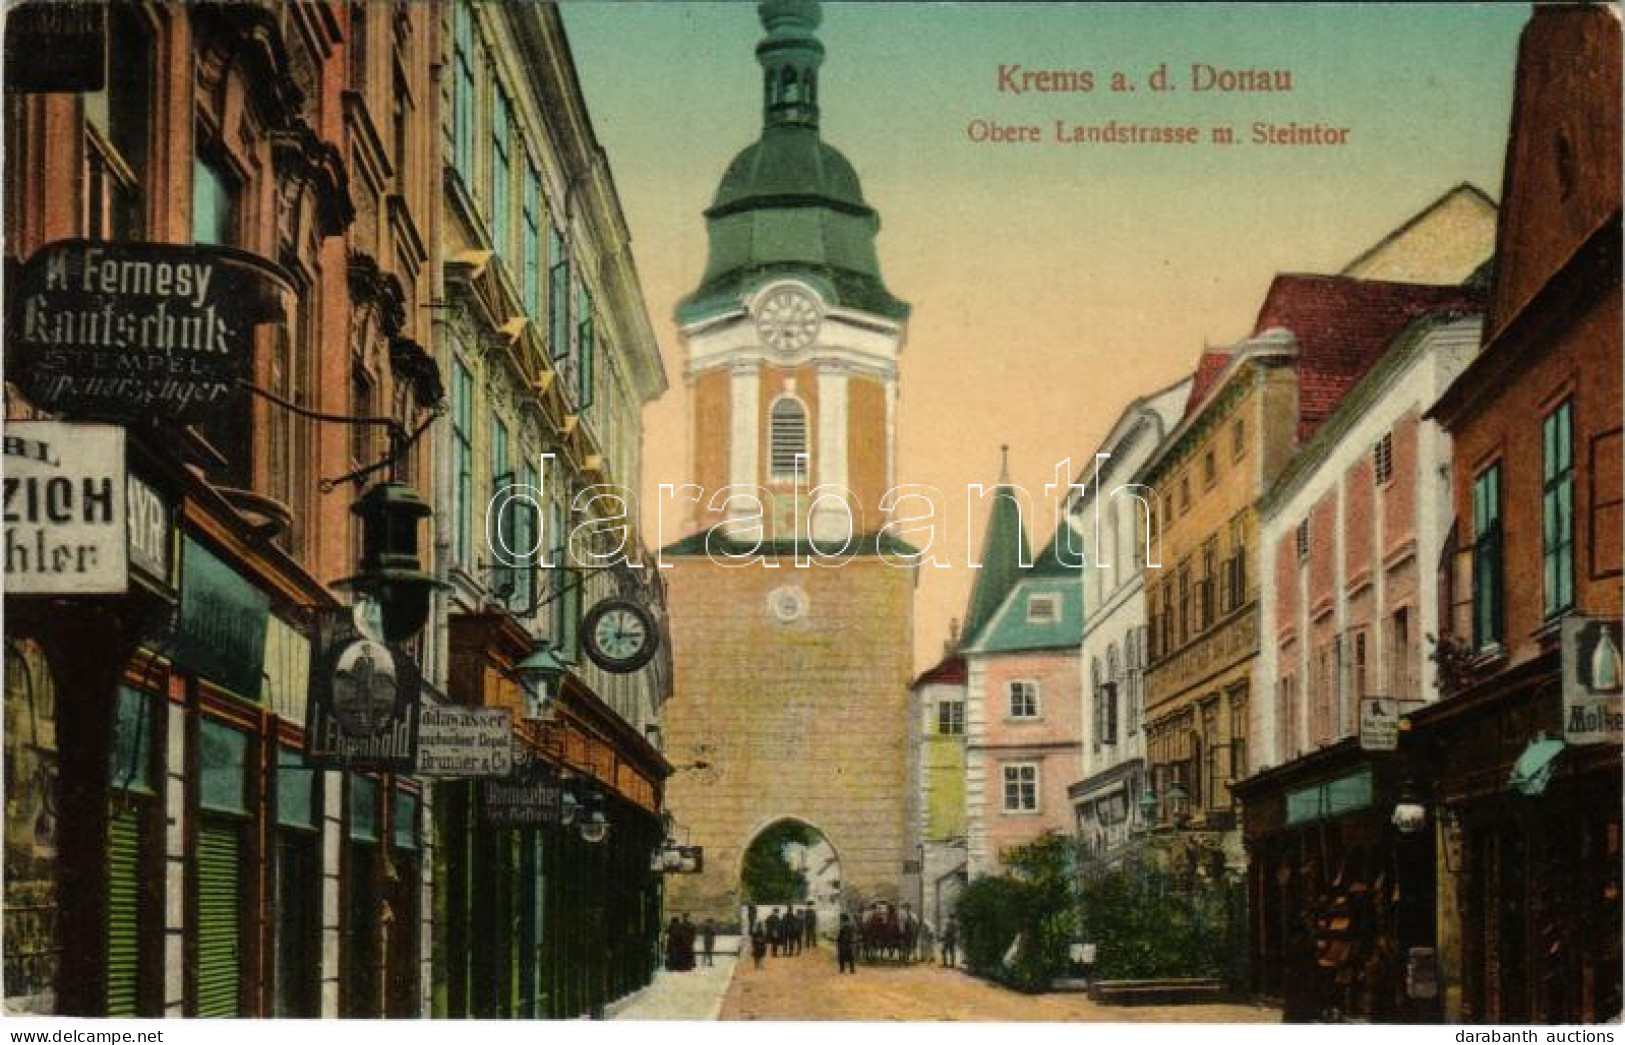 T2 1912 Krems An Der Donau, Obere Landstrasse M. Steintor / Street View, Gate, Shop Of K. Fernesy - Non Classificati